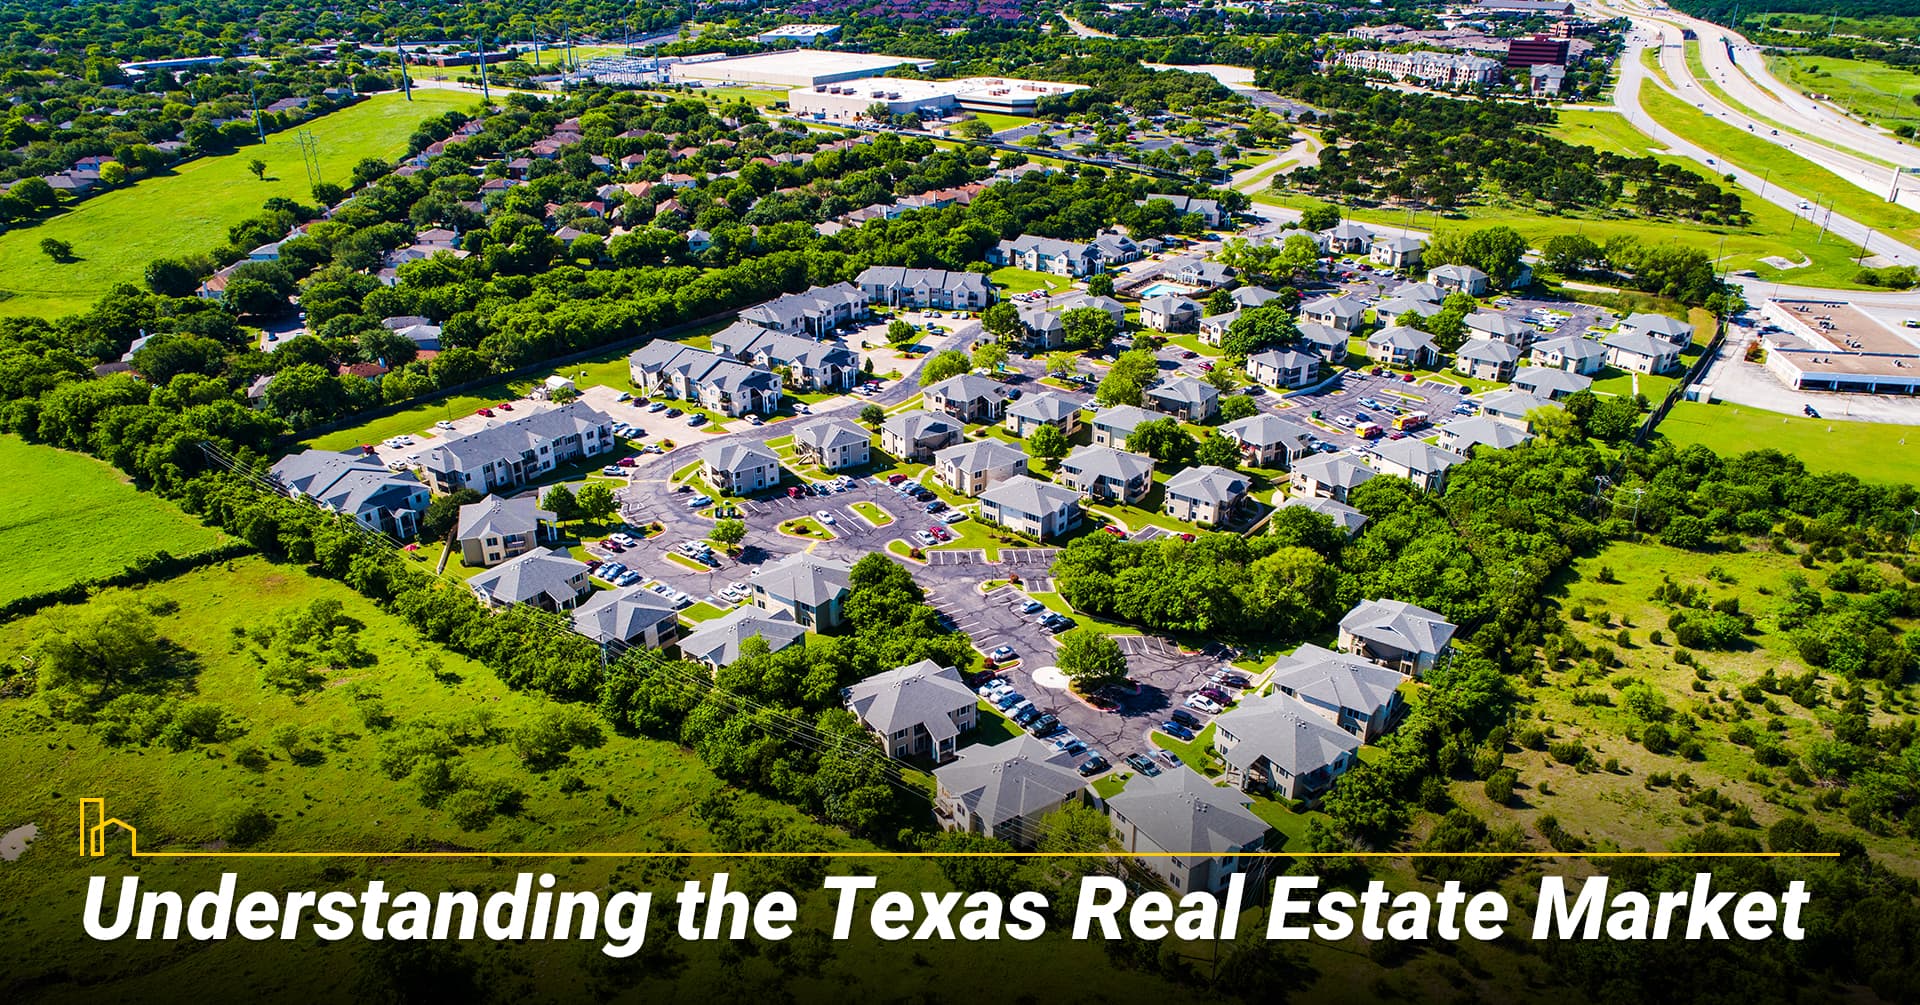 2. Understanding the Texas Real Estate Market